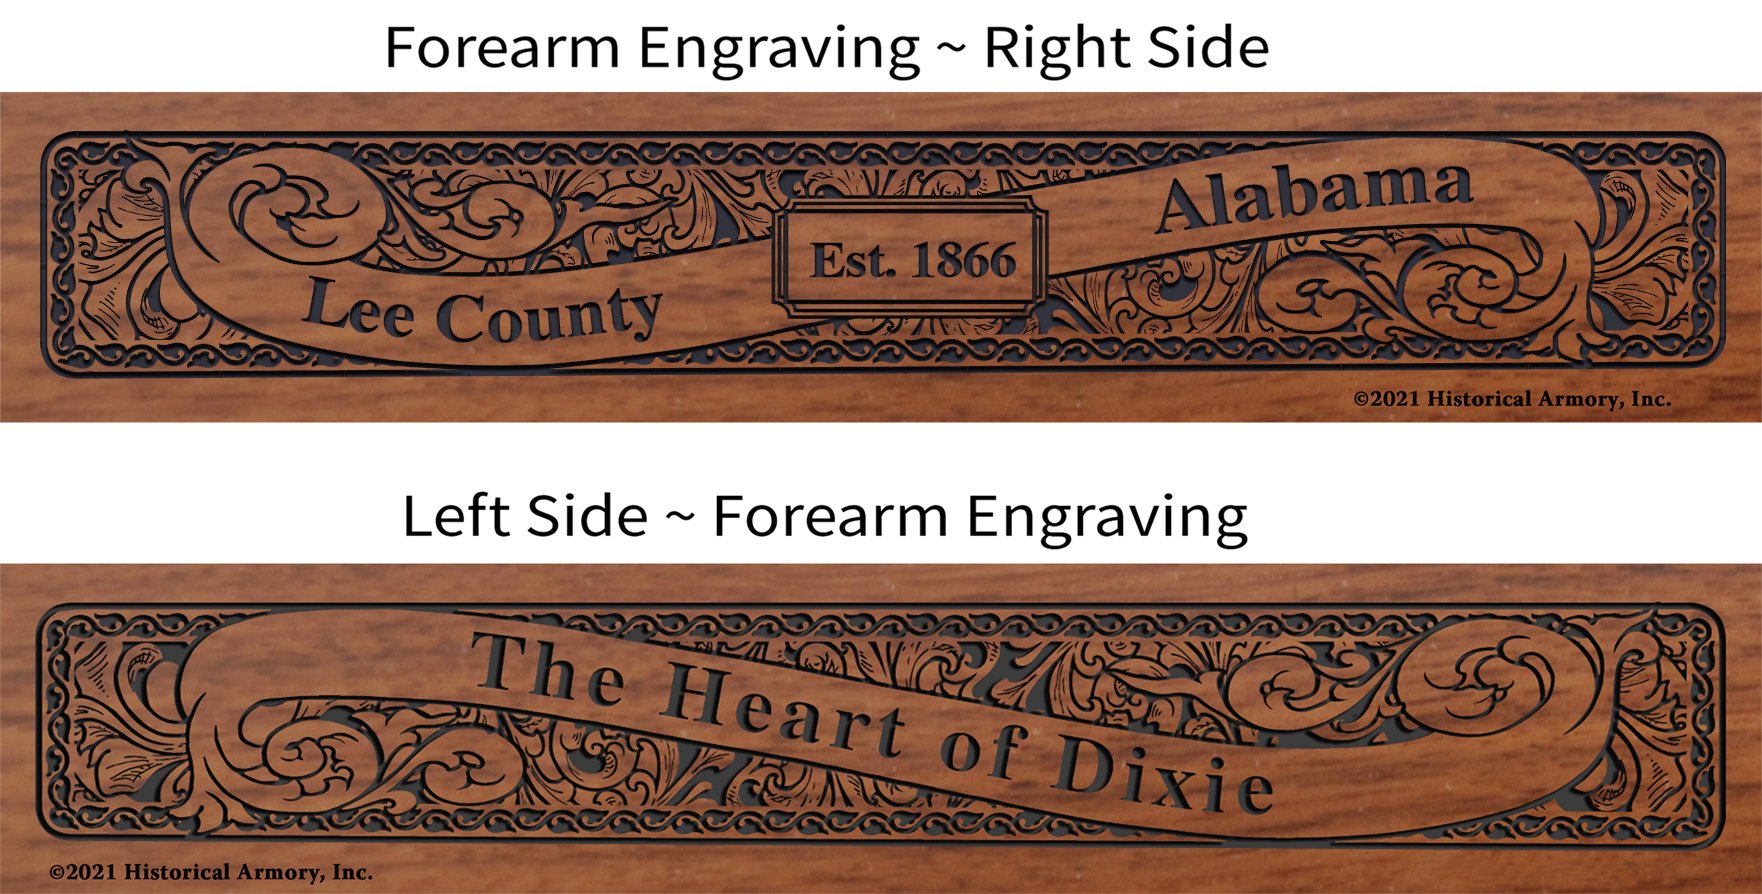 Lee County Alabama Establishment and Motto History Engraved Rifle Forearm